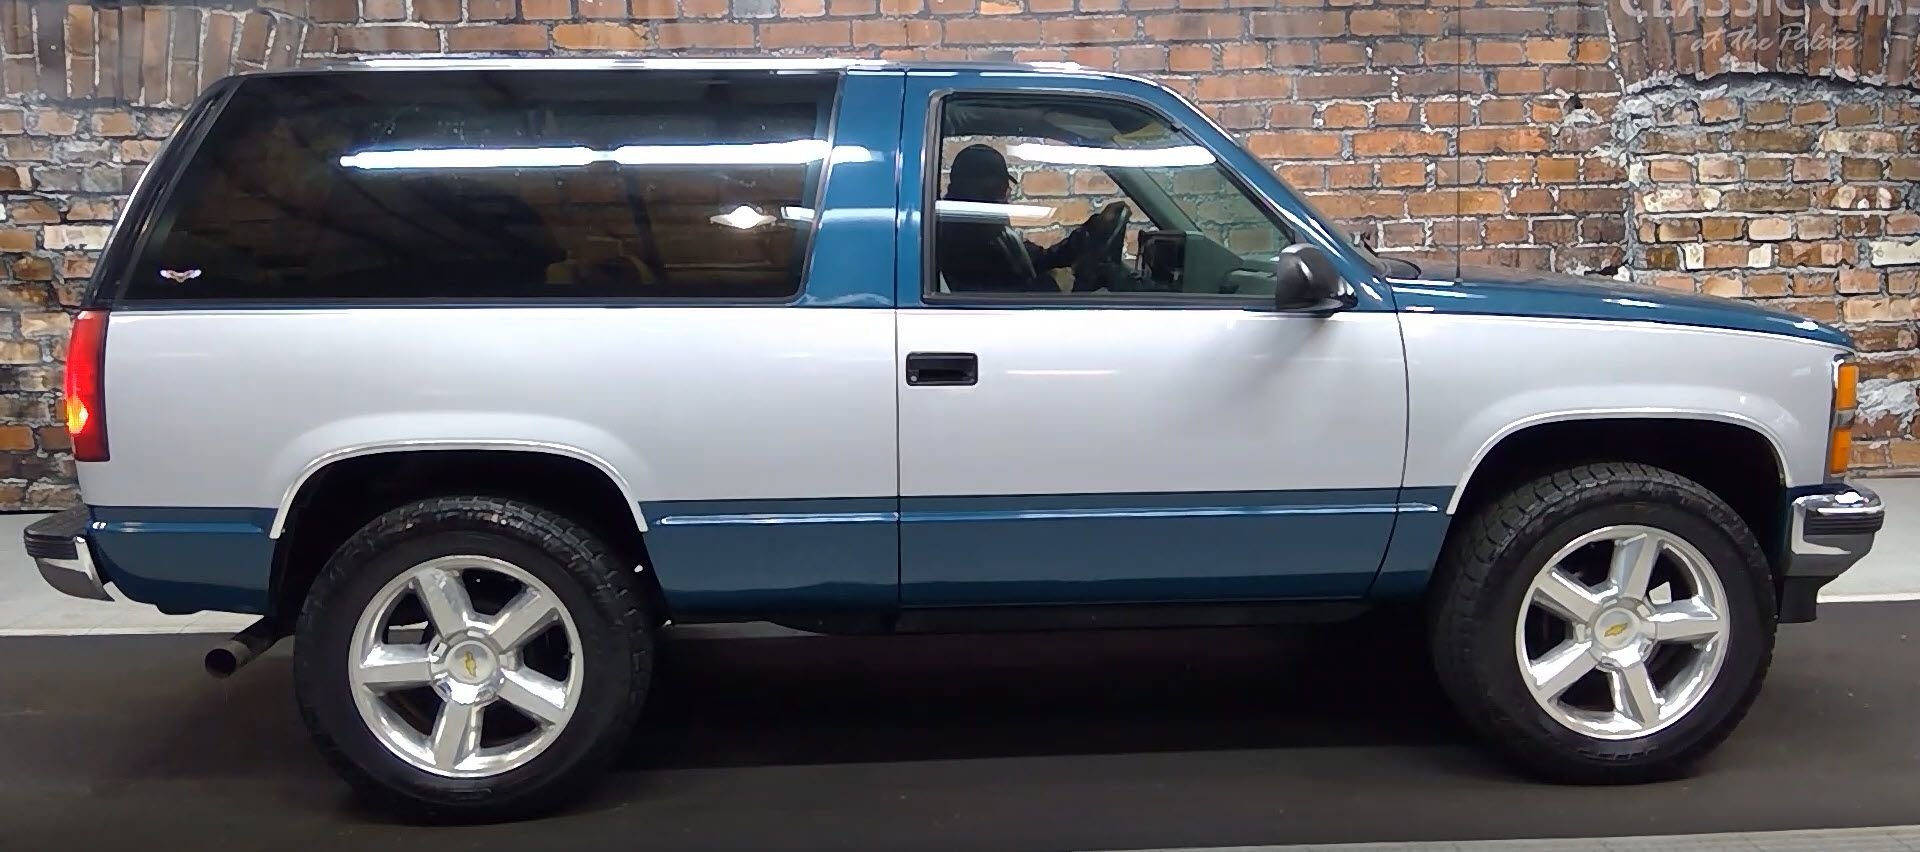 1993 Chevrolet Blazer | GAA Classic Cars